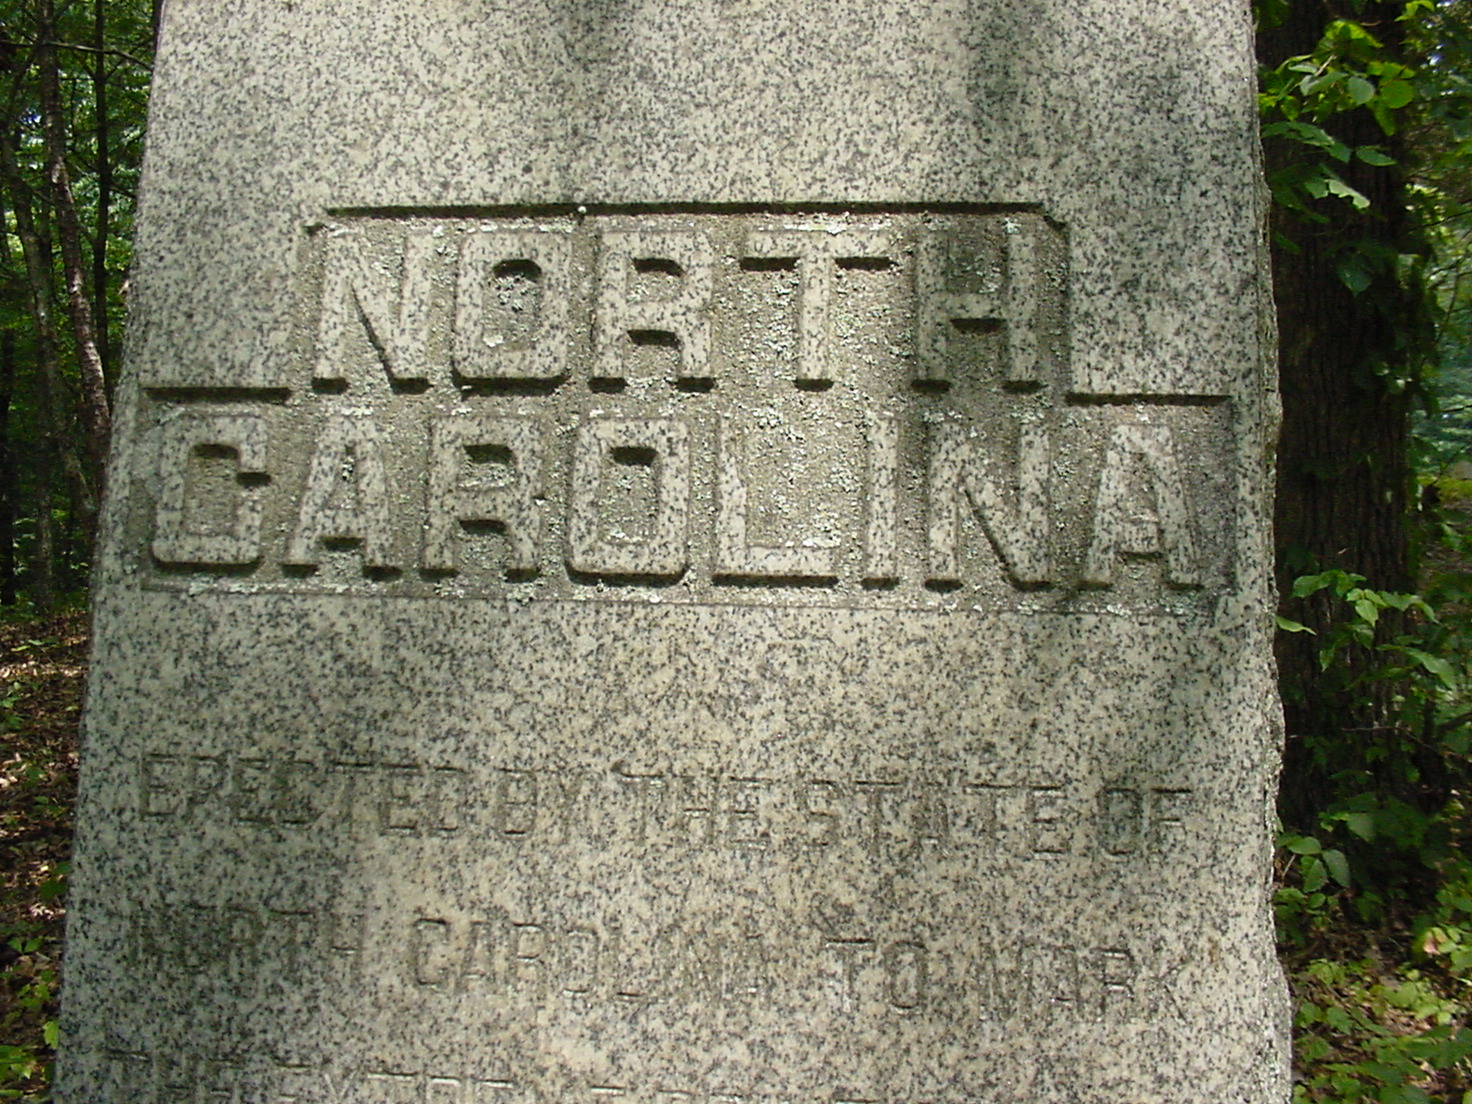 North Carolina Monument